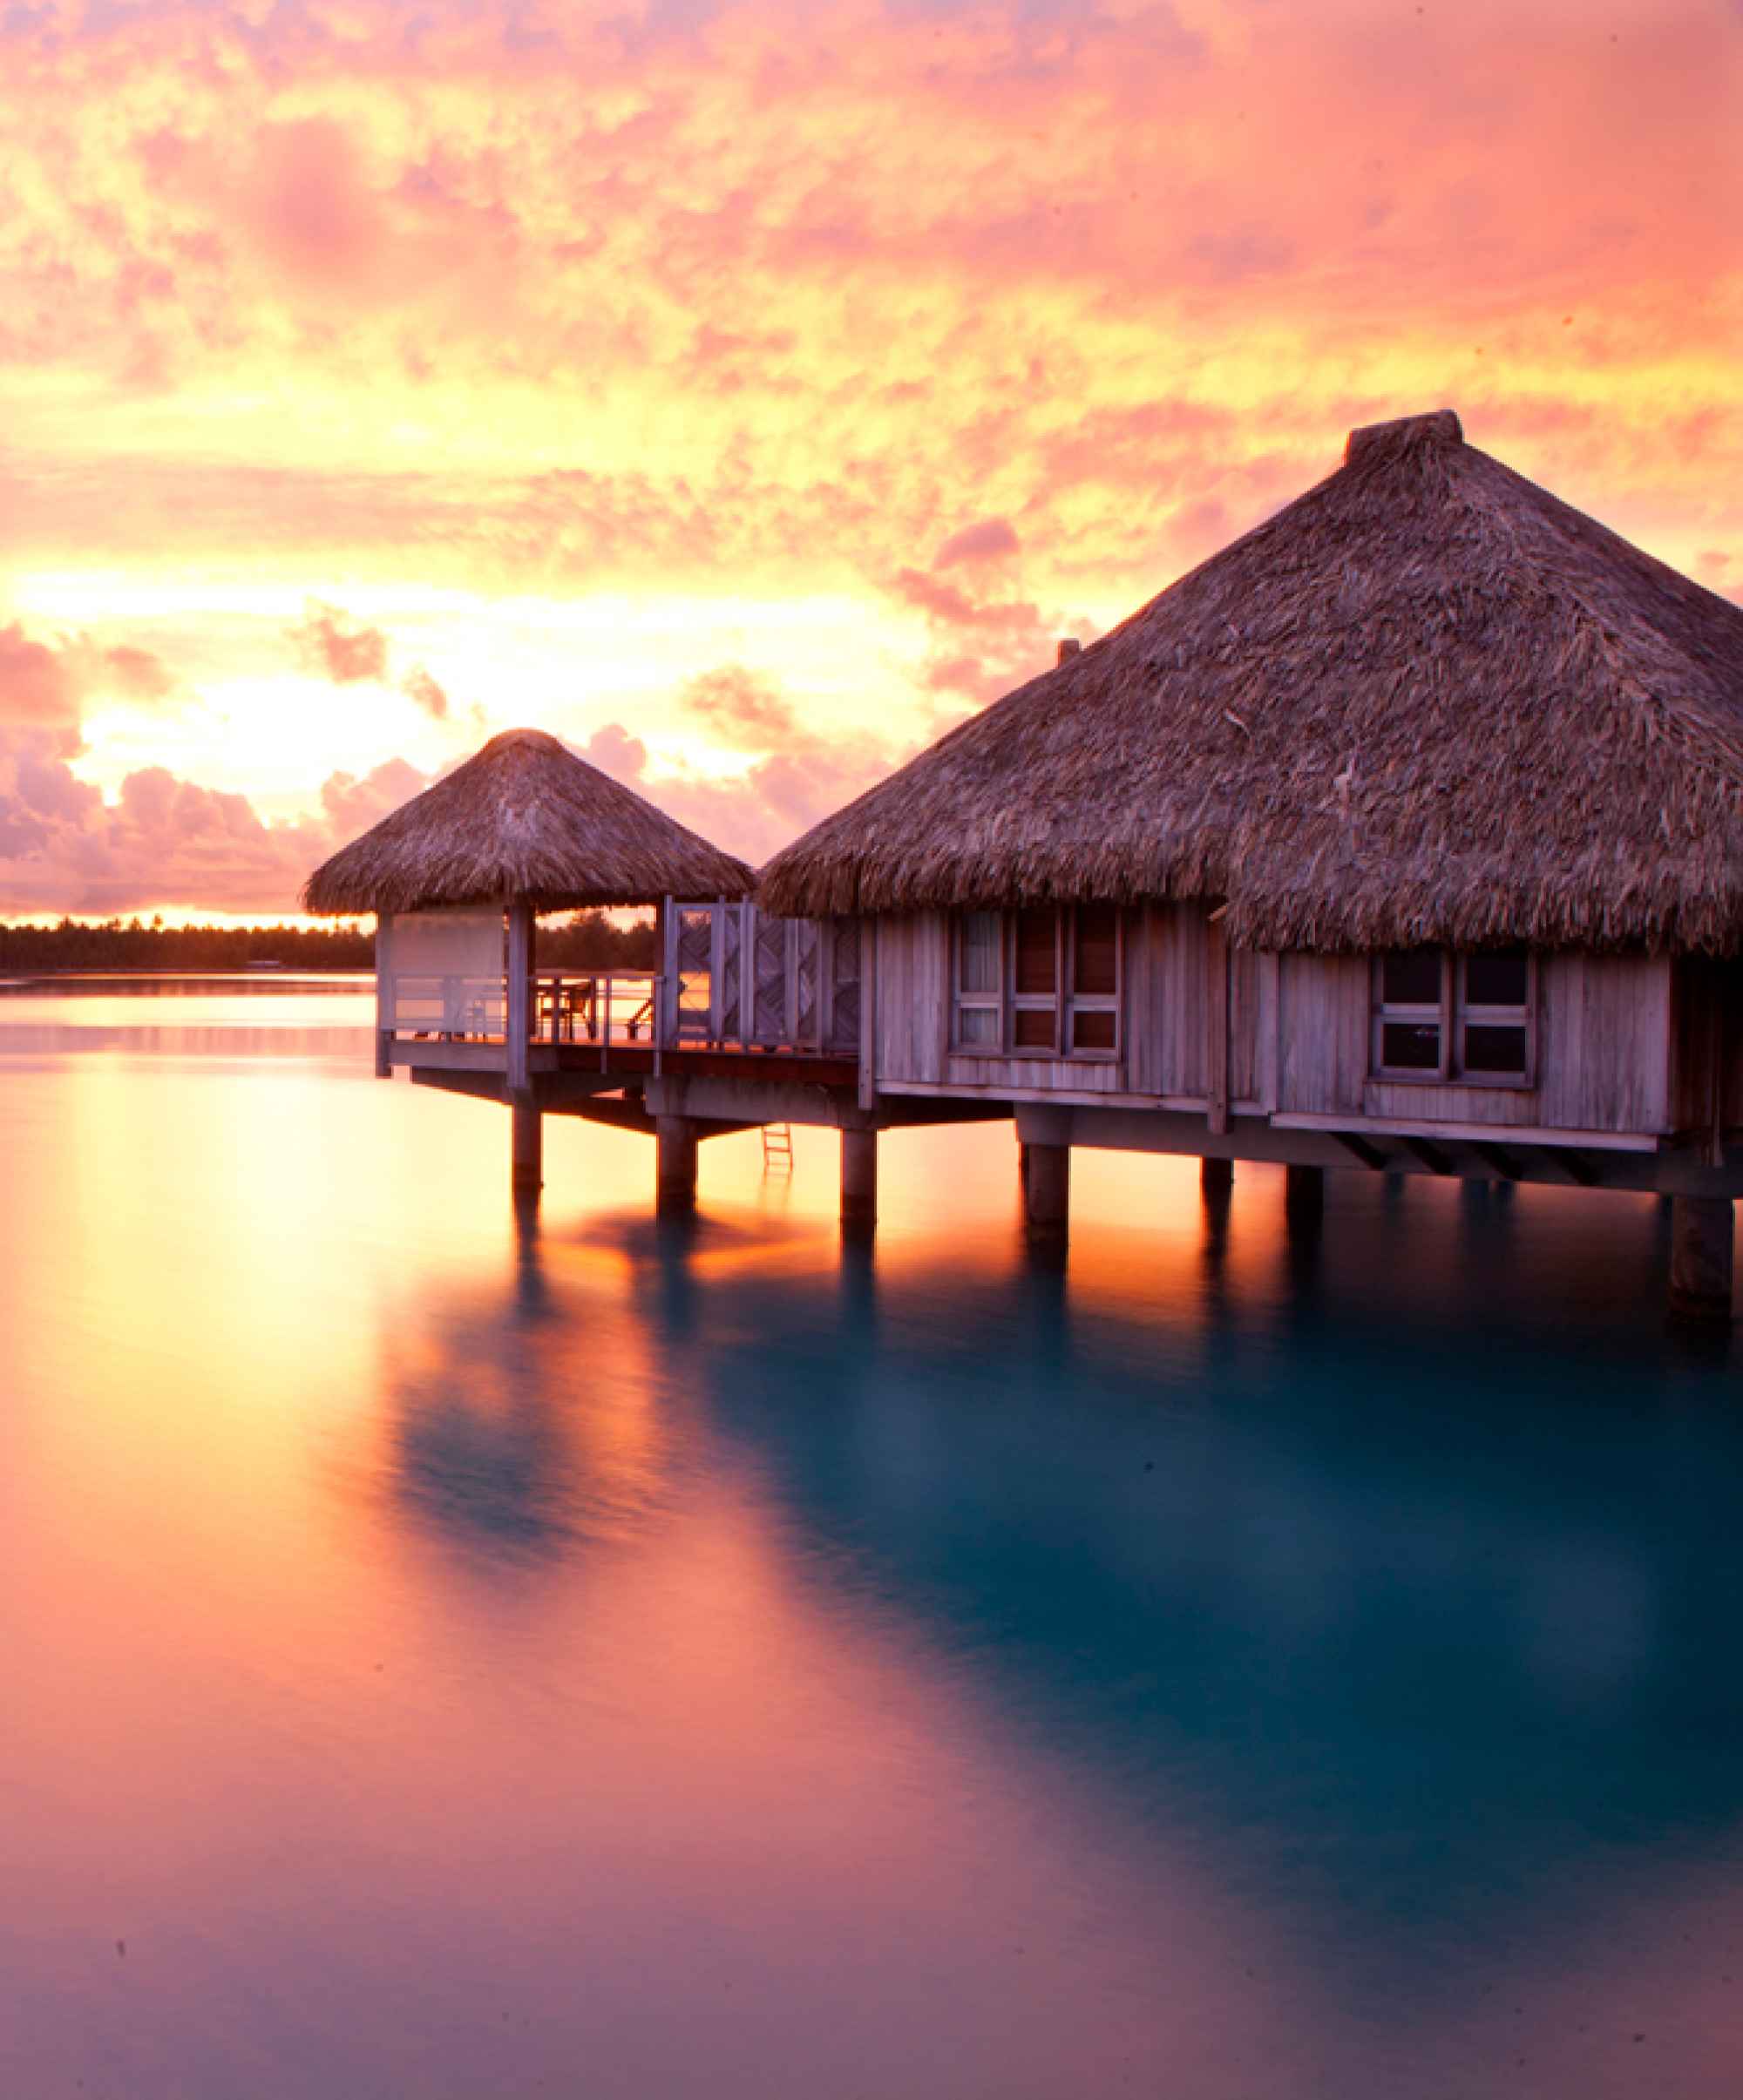 3. The Islands of Tahiti